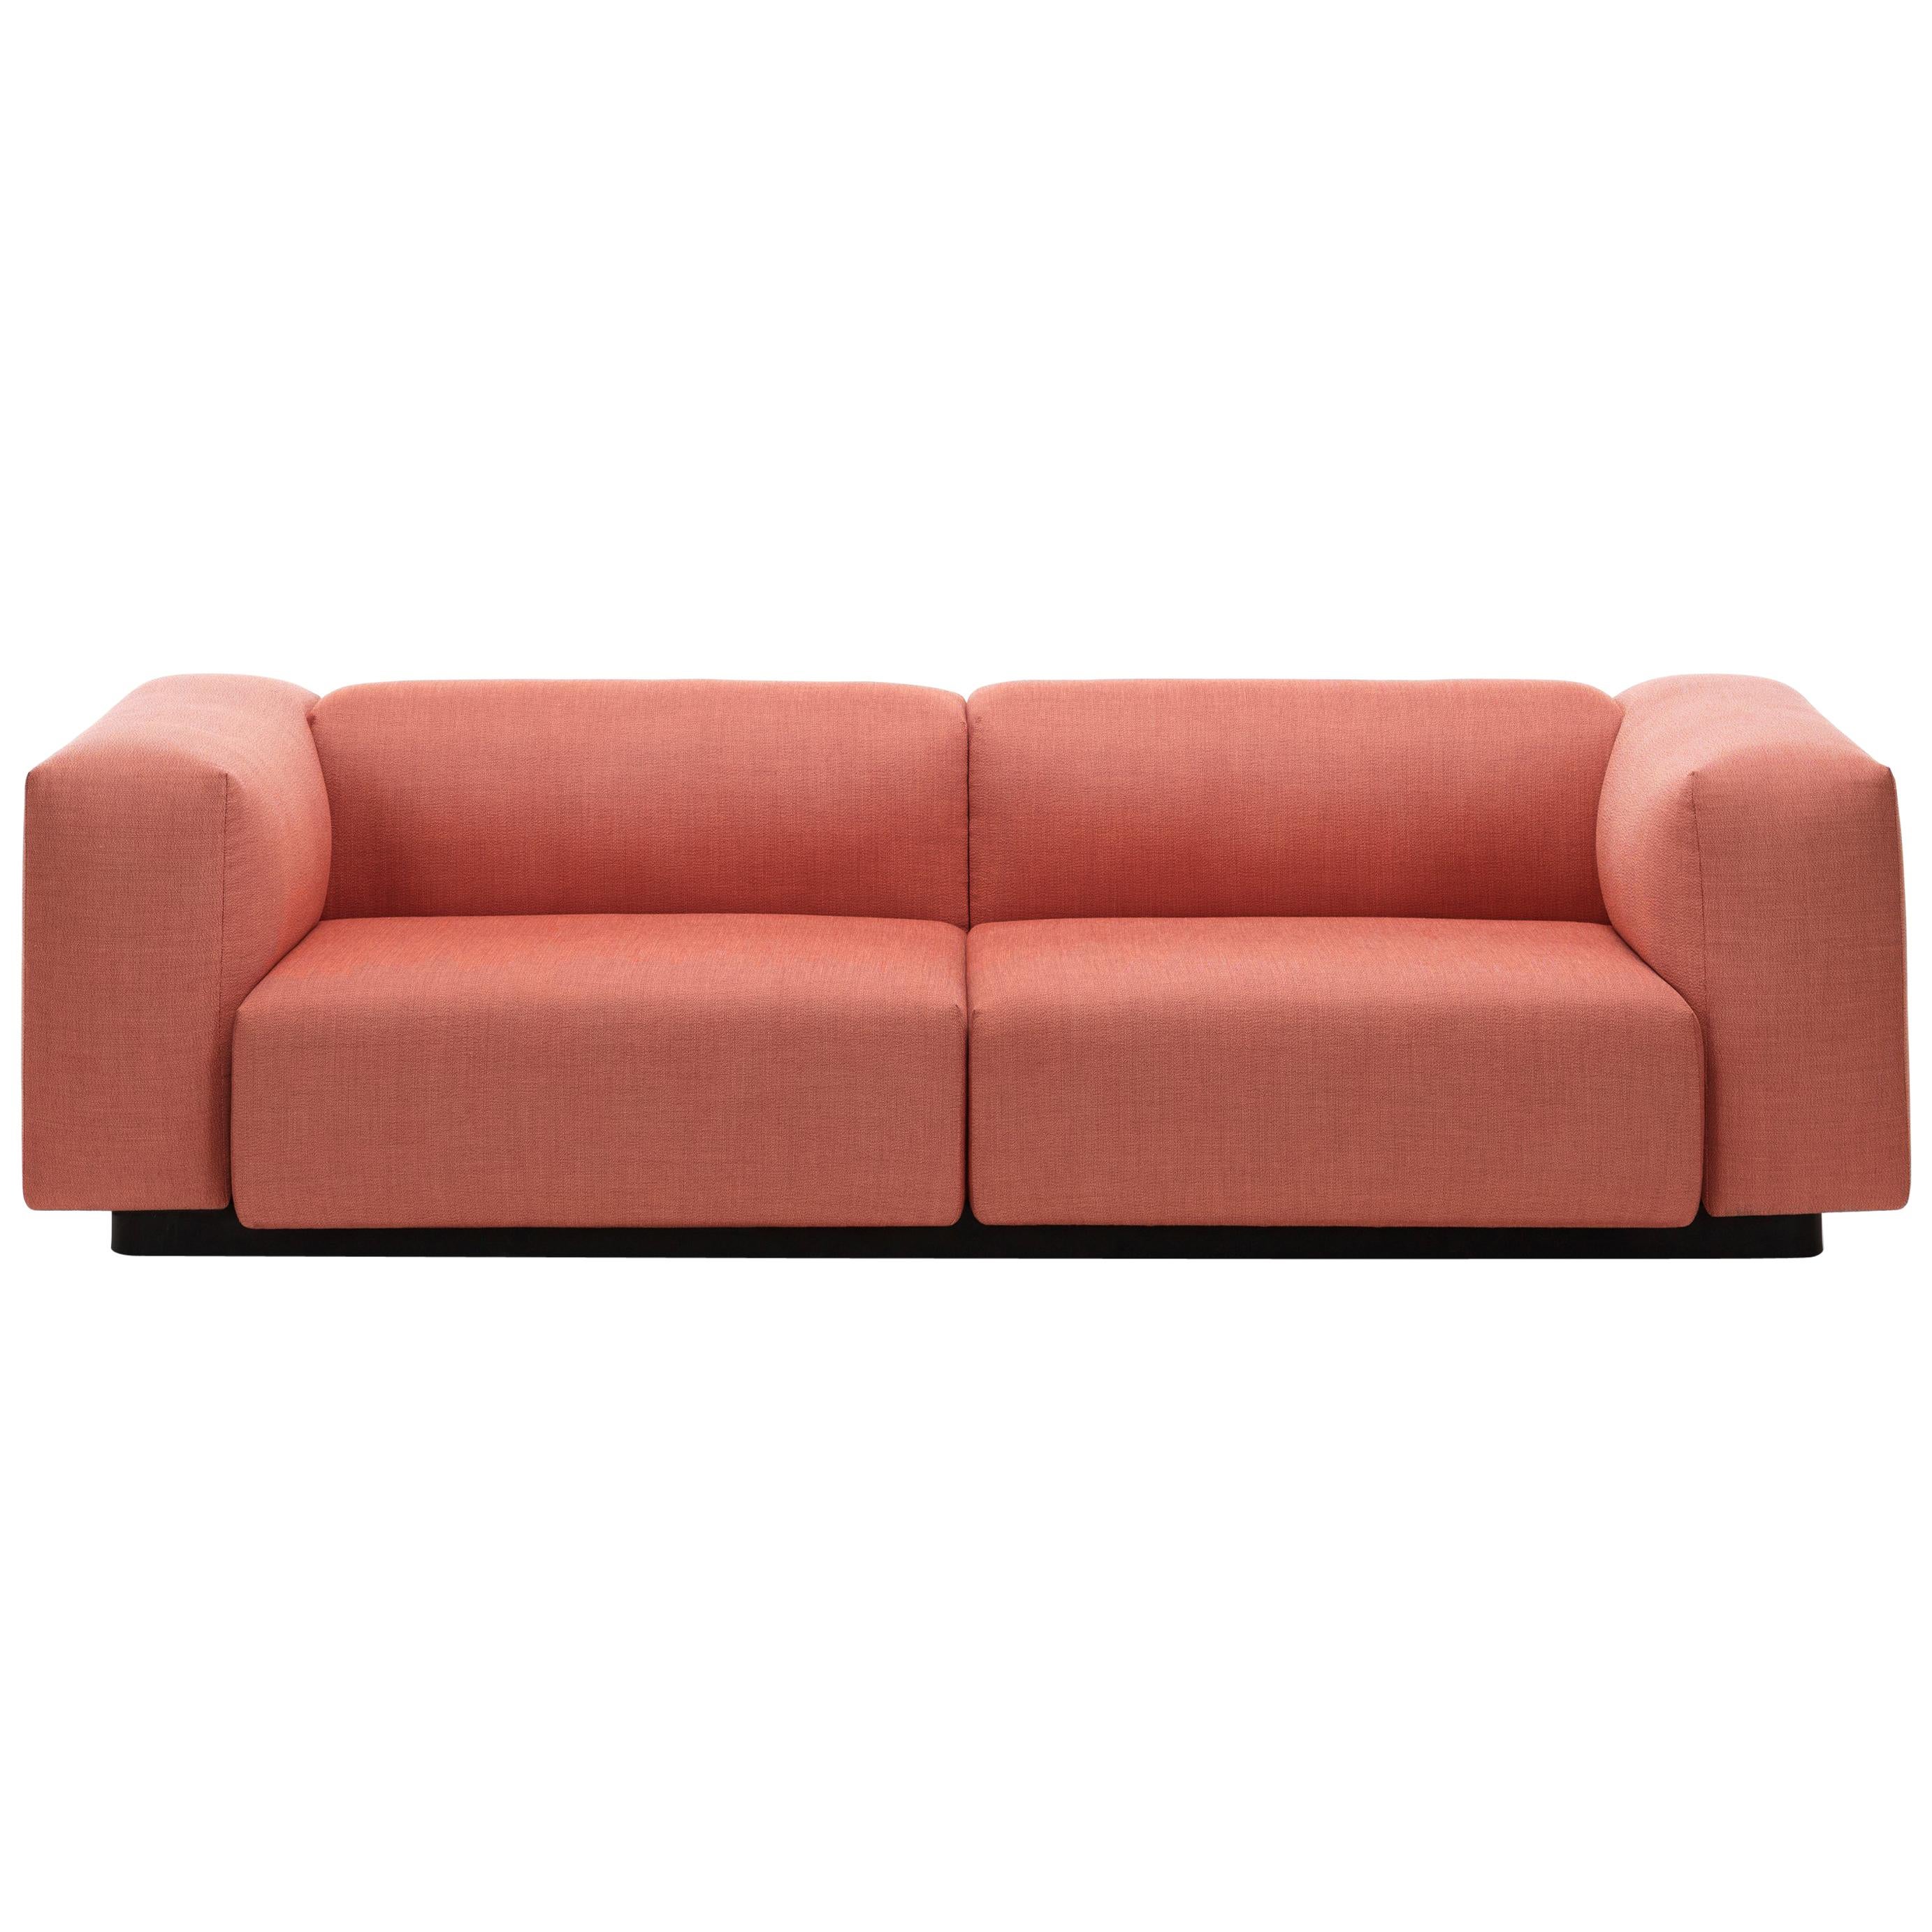 Vitra Soft Modular 2-Seat Sofa in Rose and Dark Orange Credo by Jasper Morrison im Angebot